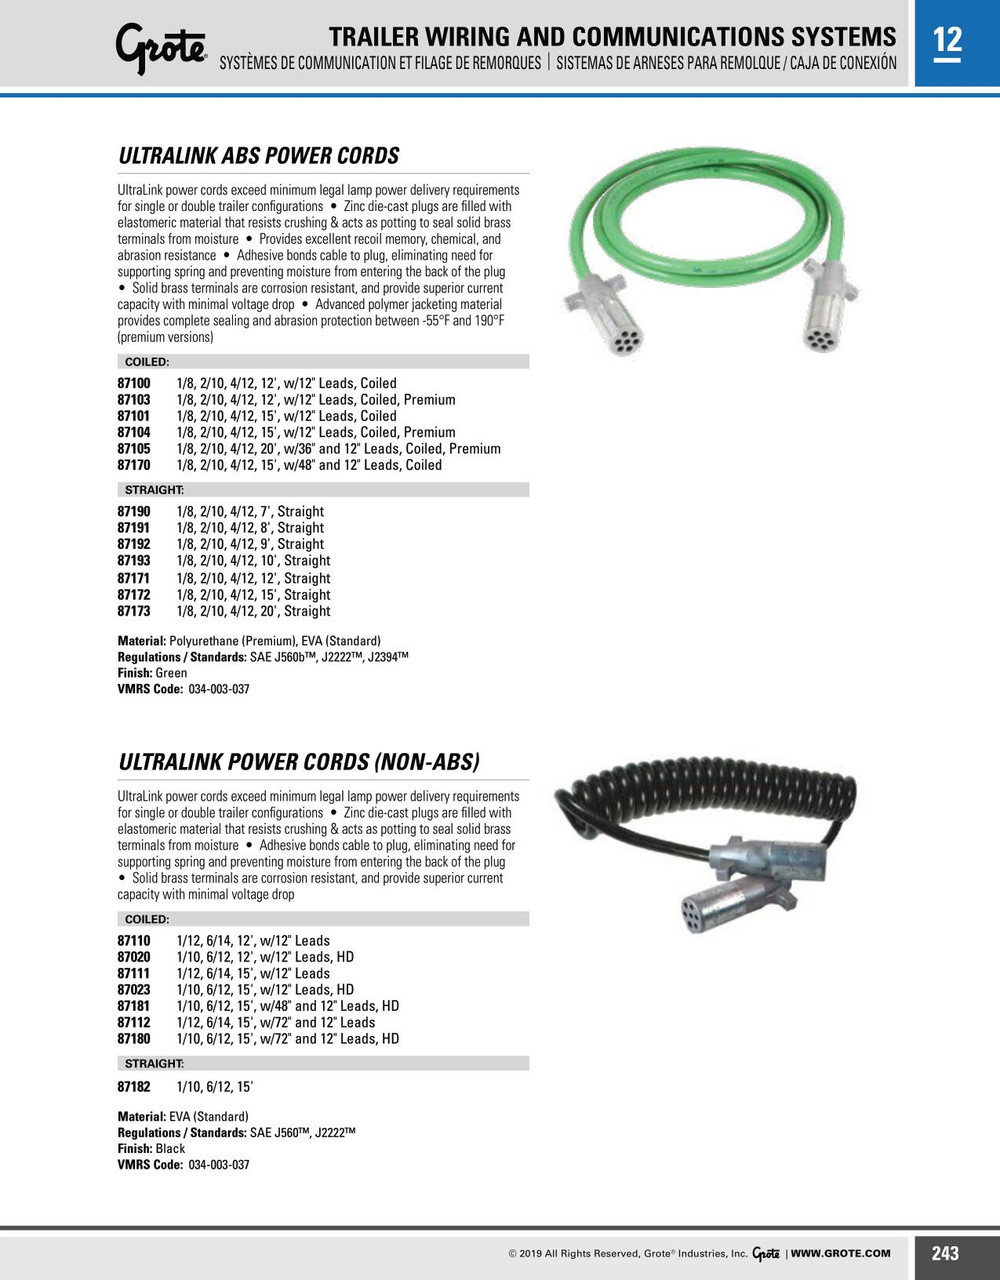 UltraLink® Power Cords 12' w/12" Lead Coiled HD - Black  87020